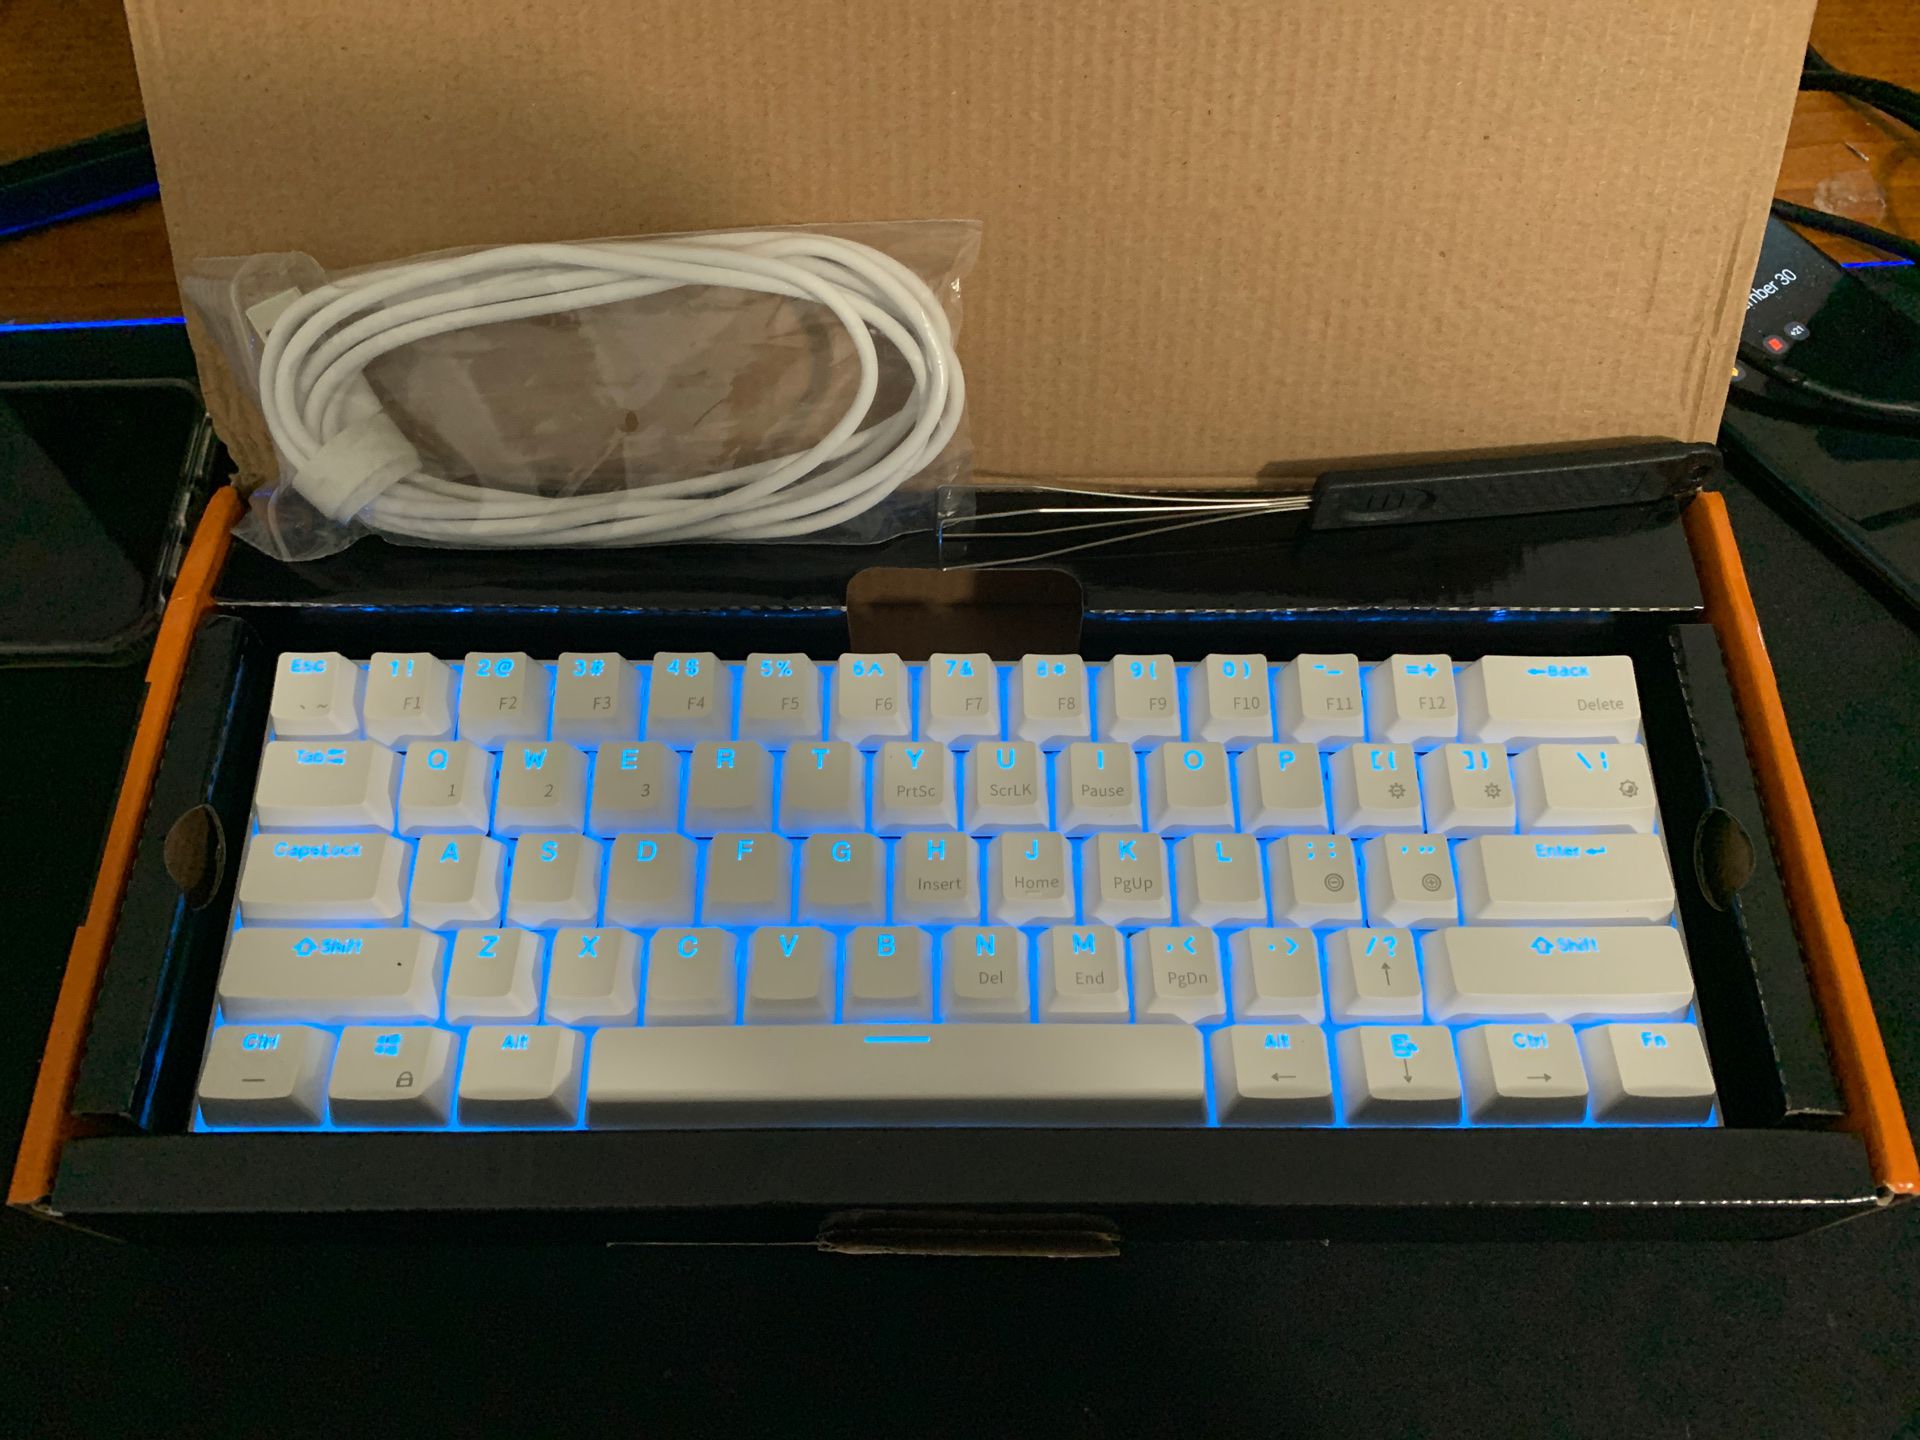 Rk61 white 60% keyboard